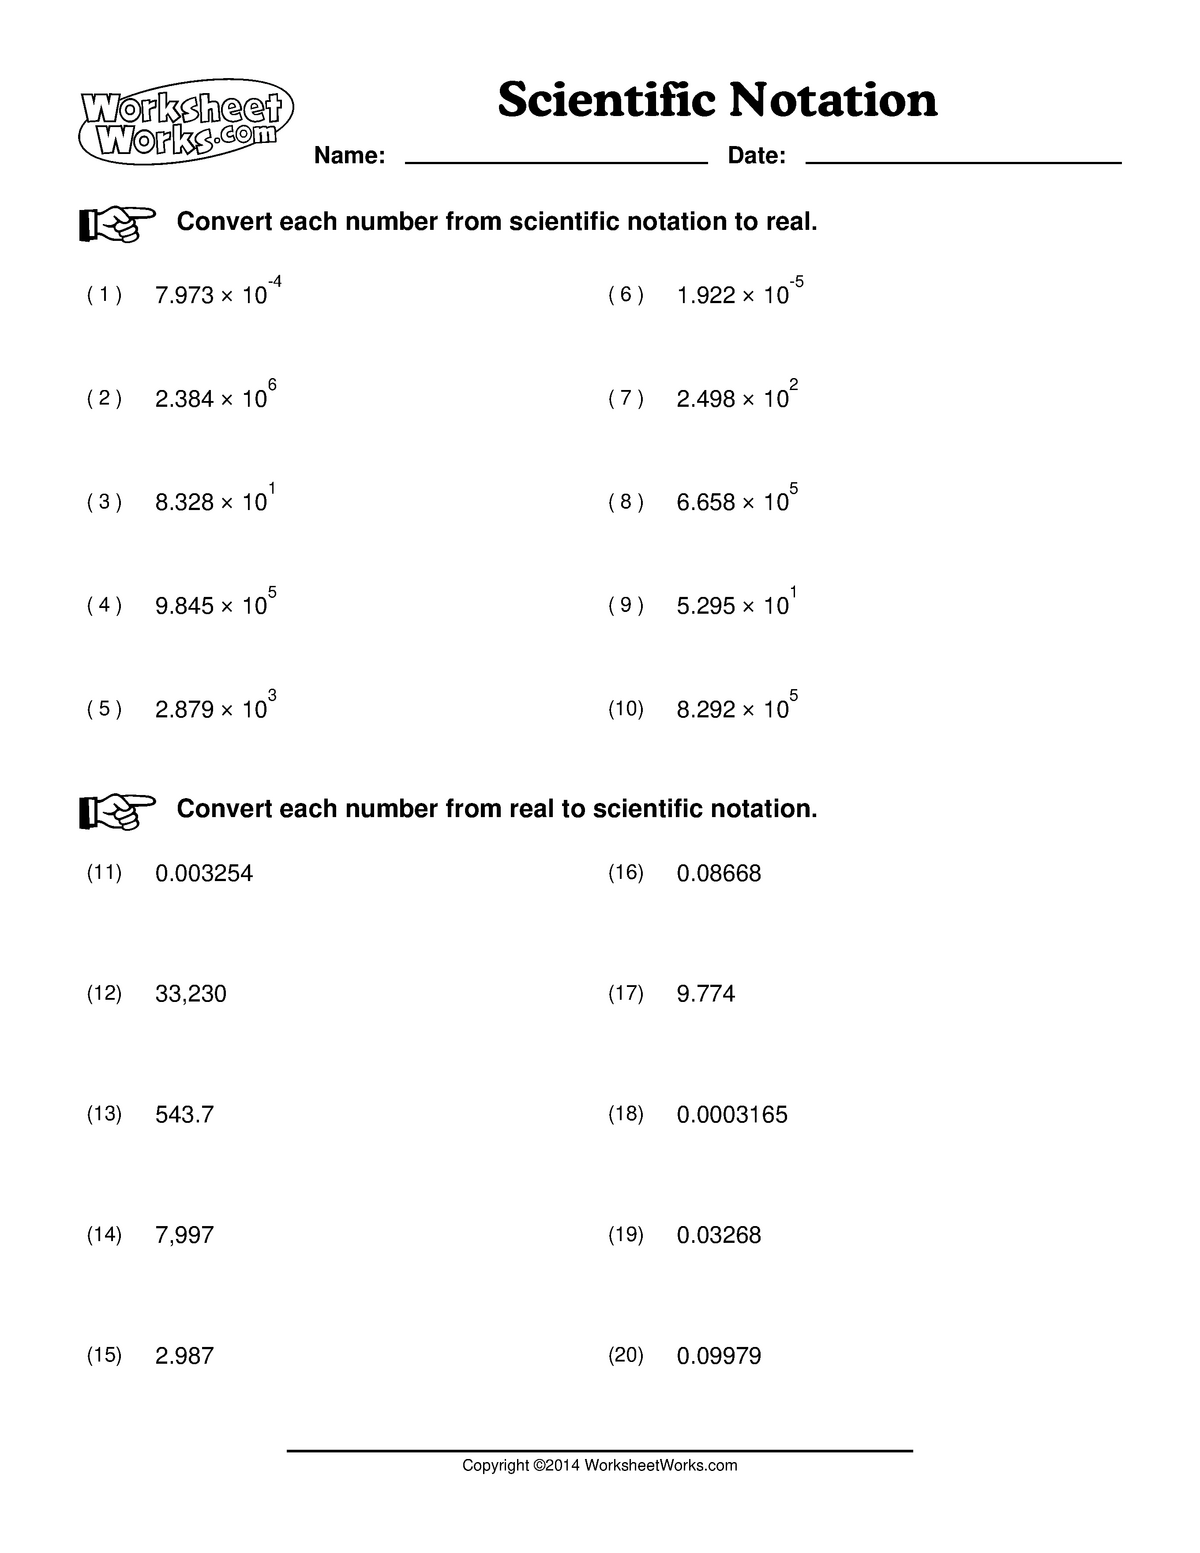 Scientific Notation Practice Problems - CHEM-CH10 - Chemistry In Scientific Notation Worksheet Answer Key